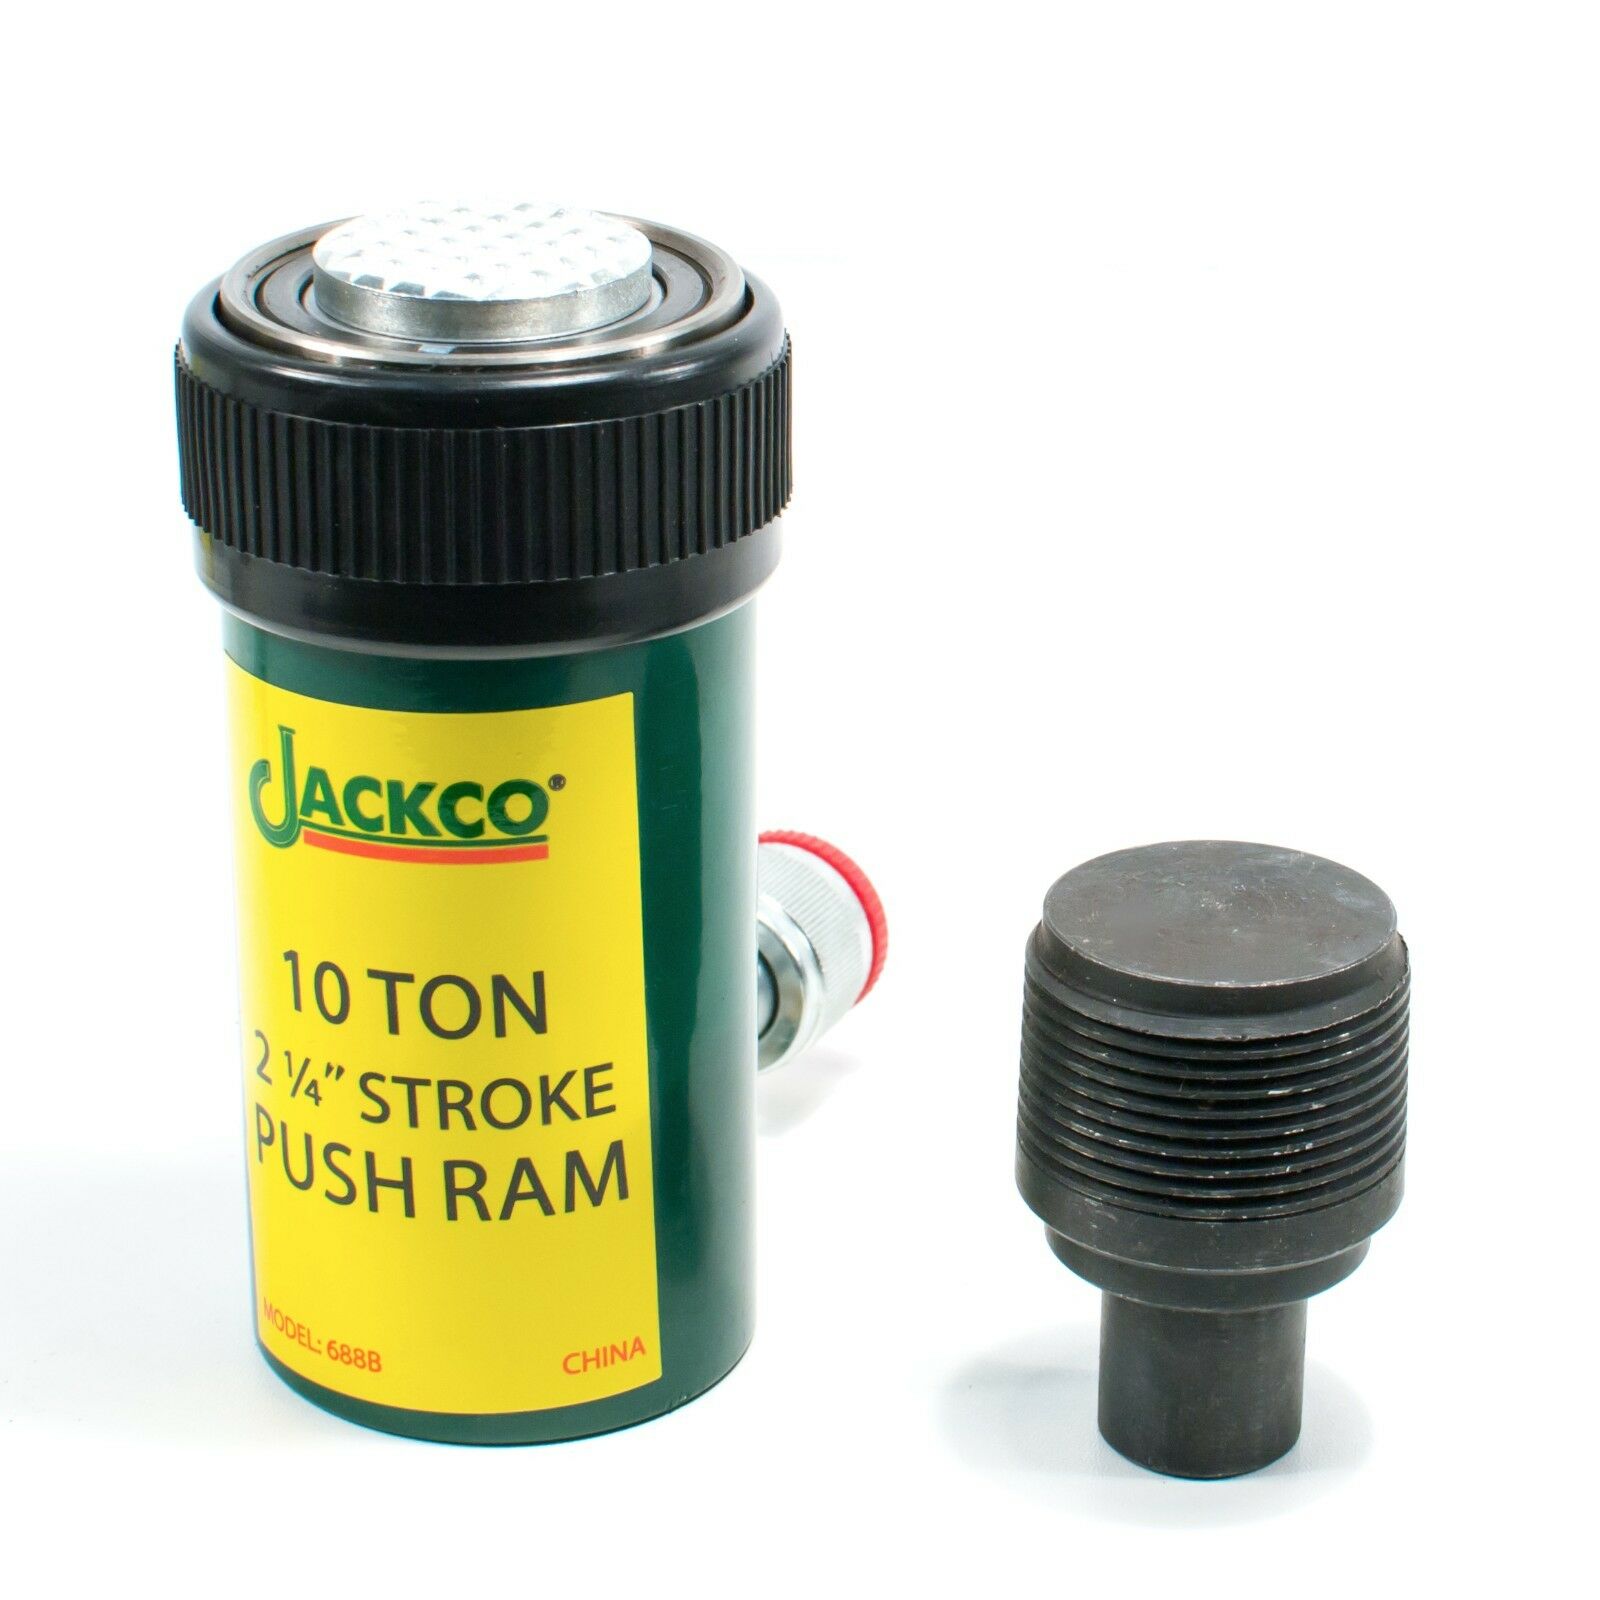 Jackco 10 Ton 2-1/4" Stroke Hydraulic Ram